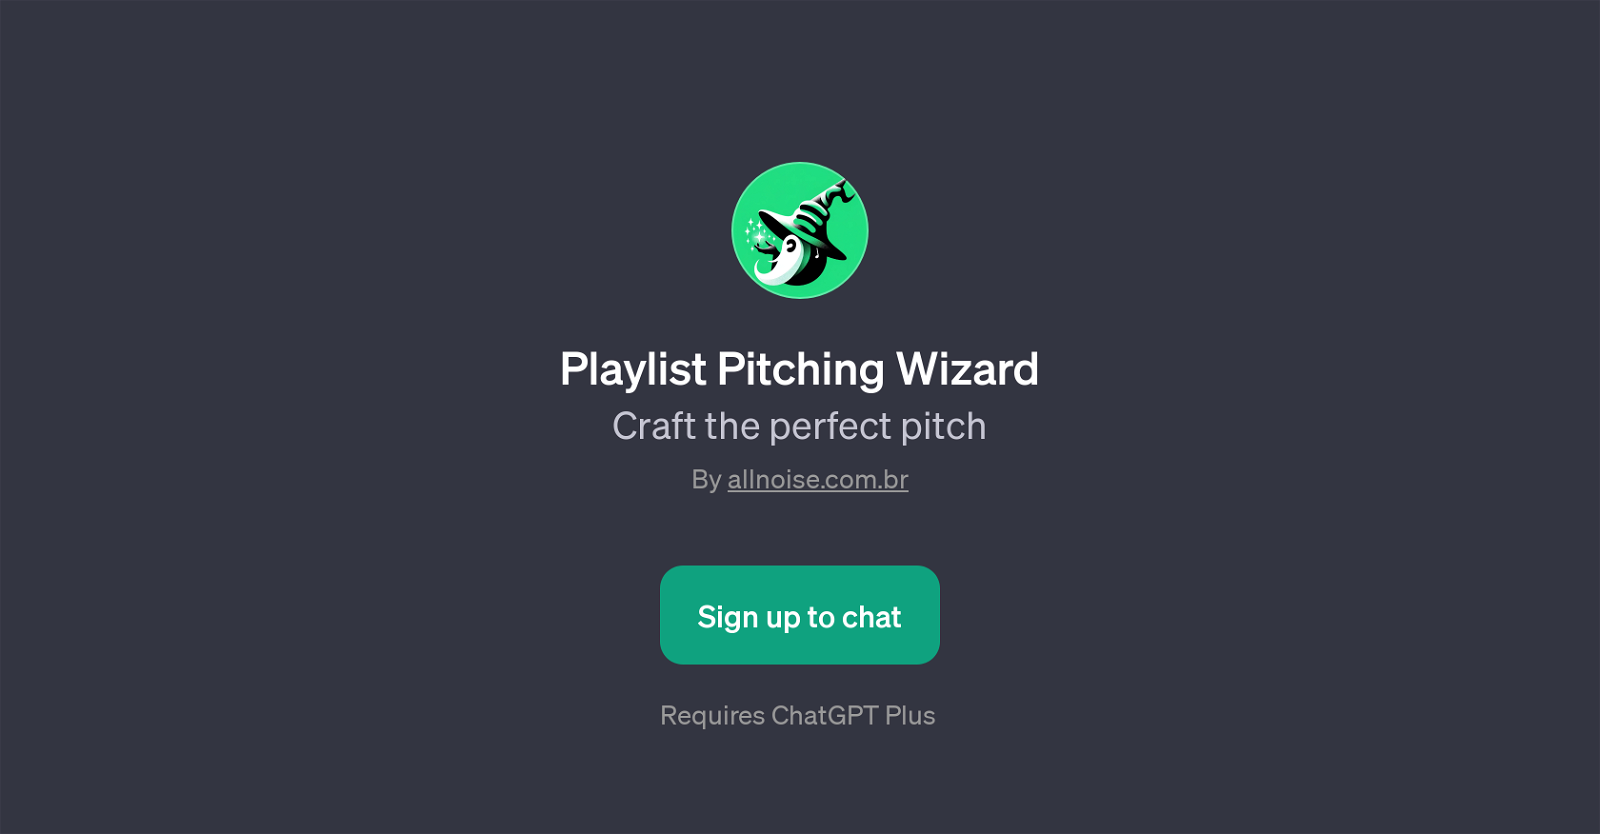 Playlist Pitching Wizard website